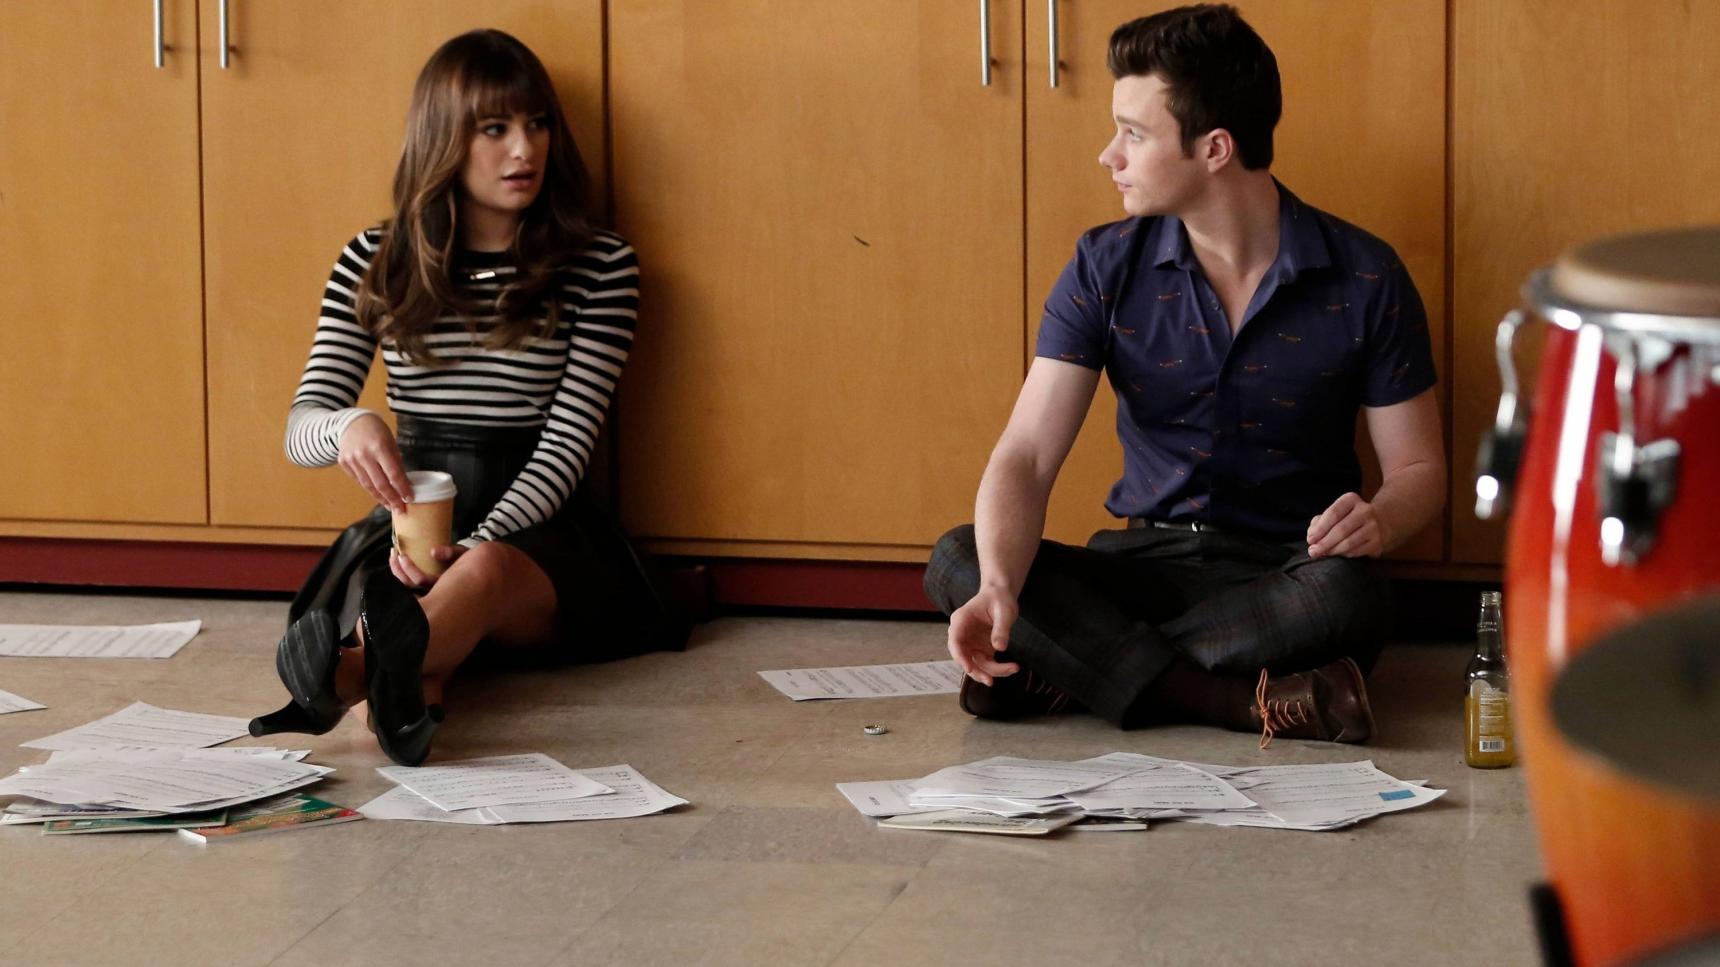 Poster del episodio 3 de Glee online